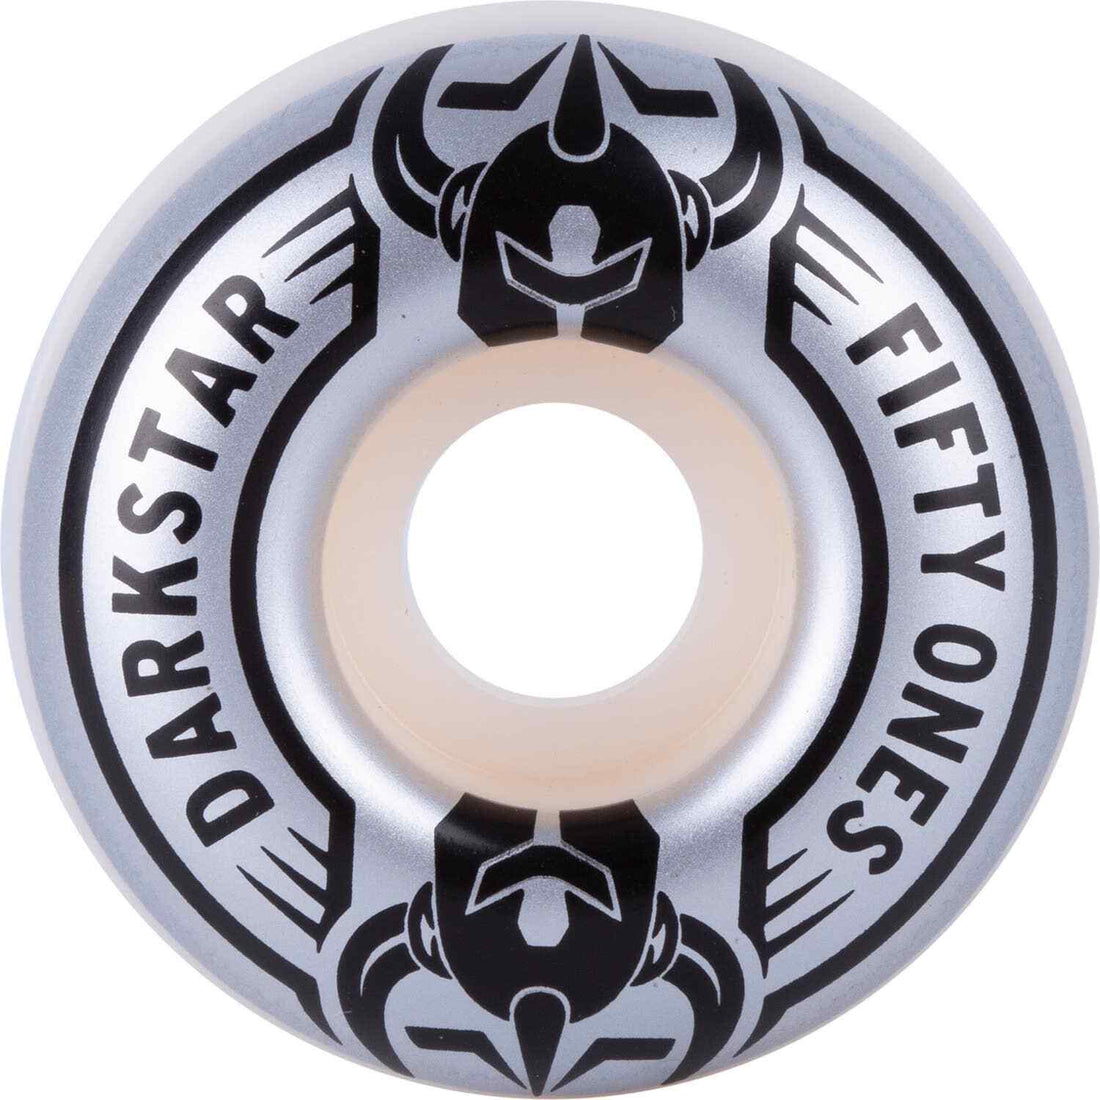 Darkstar Quarter Skateboard Wheels 51mm Silver